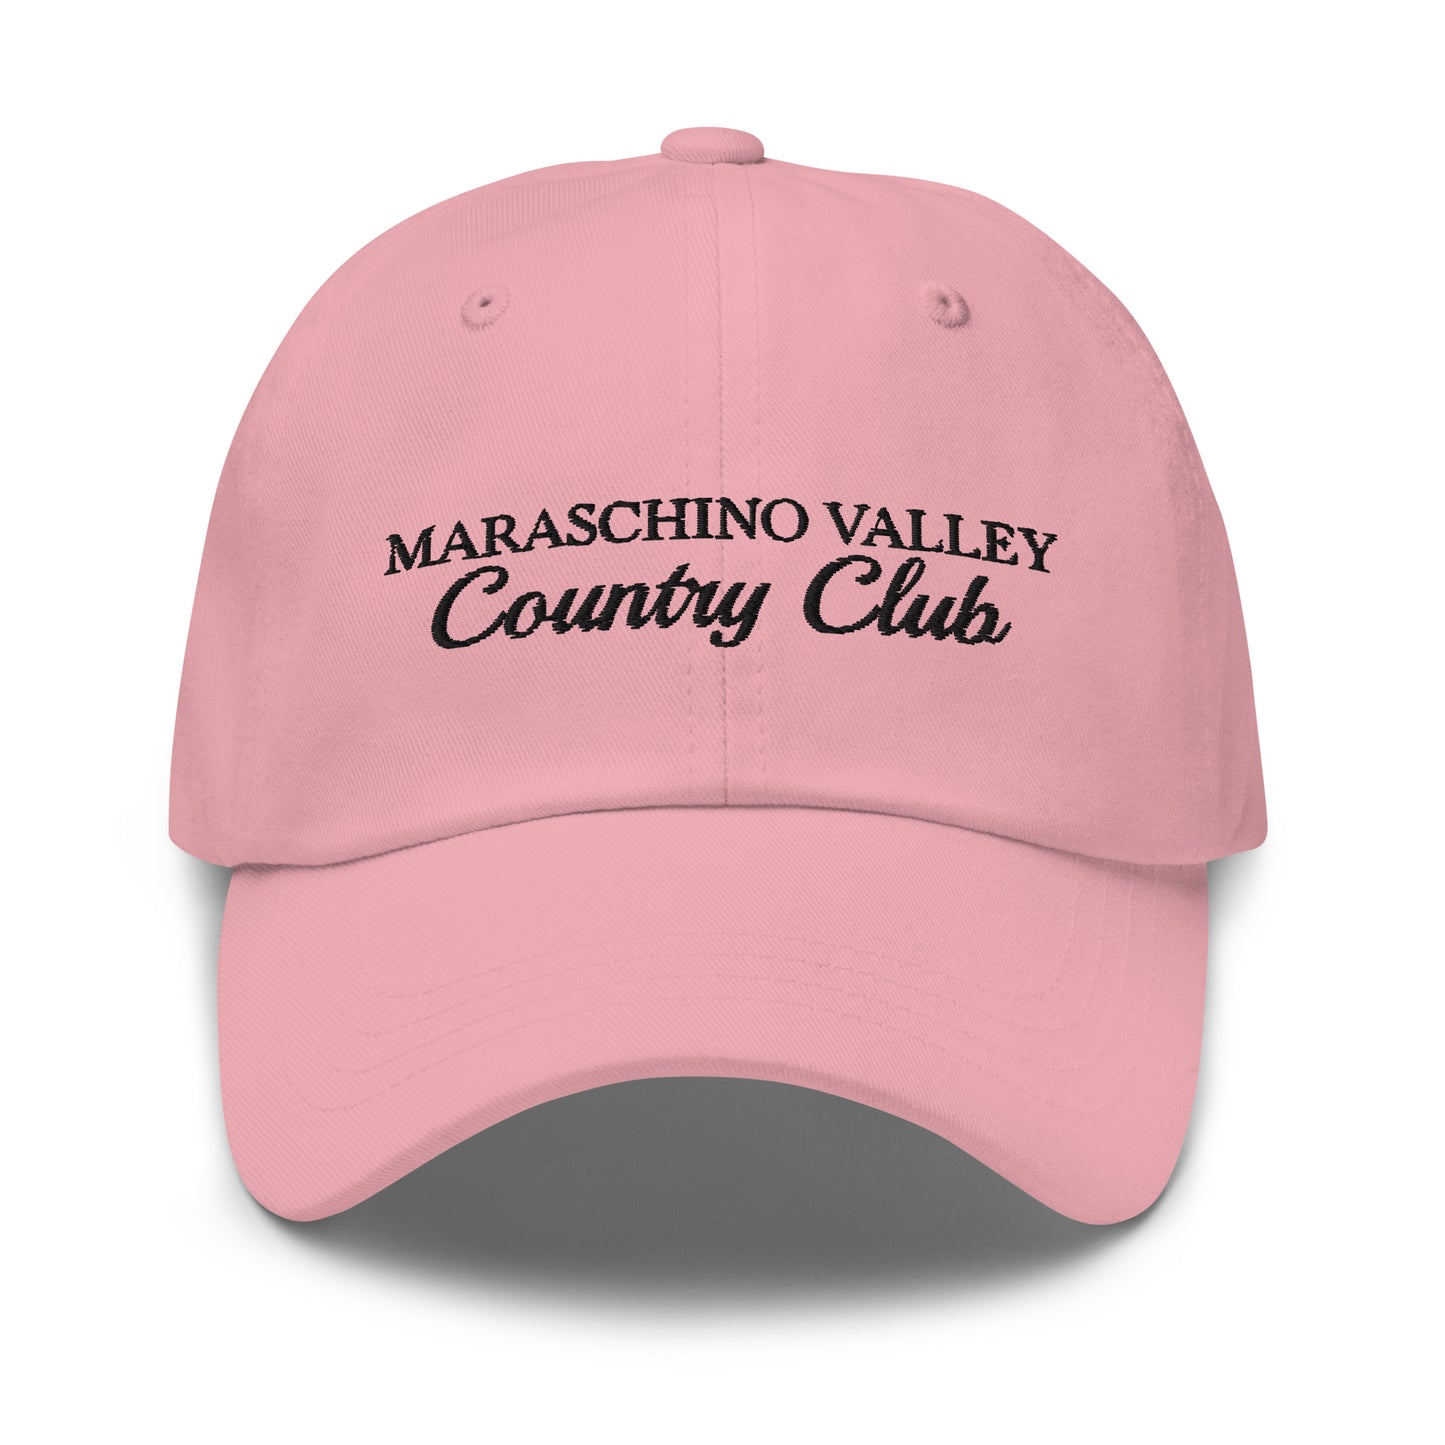 Maraschino Valley Country Club Baseball Cap